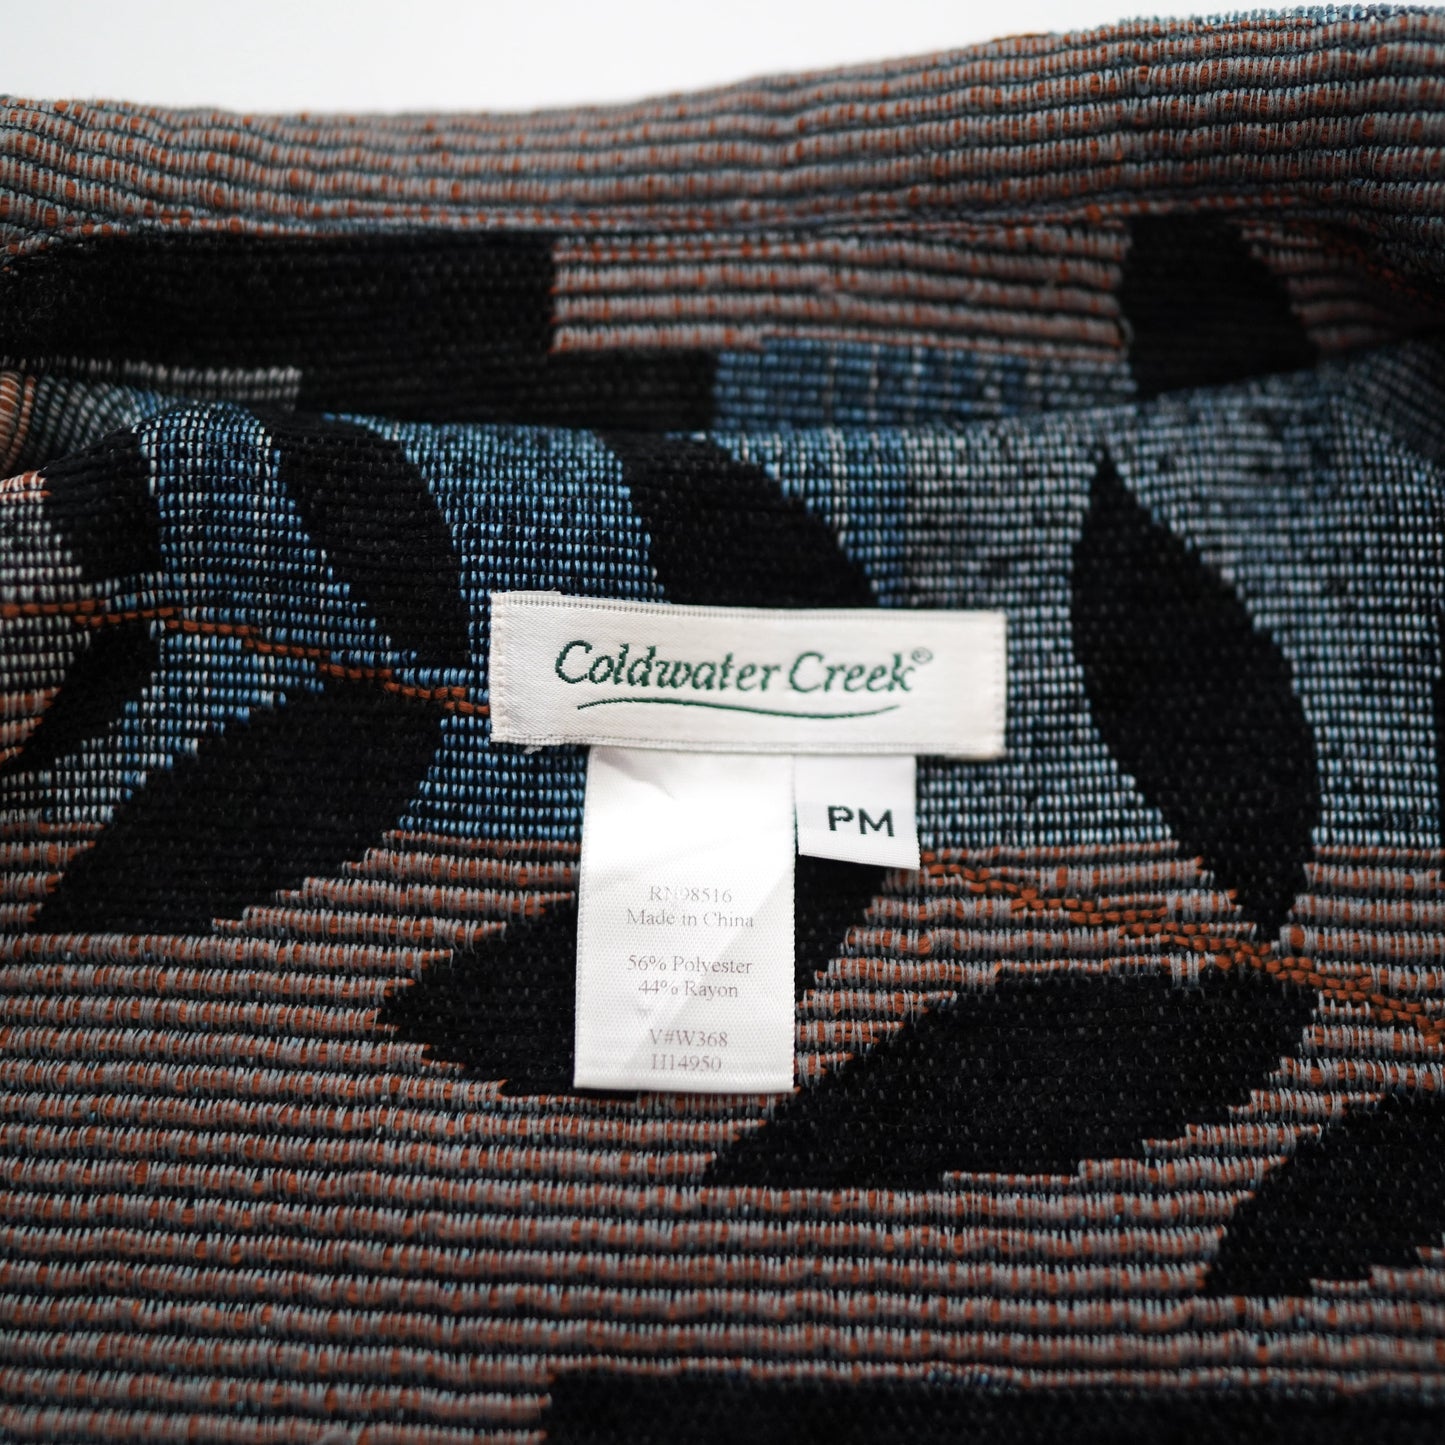 Coldwater Creek design jacket